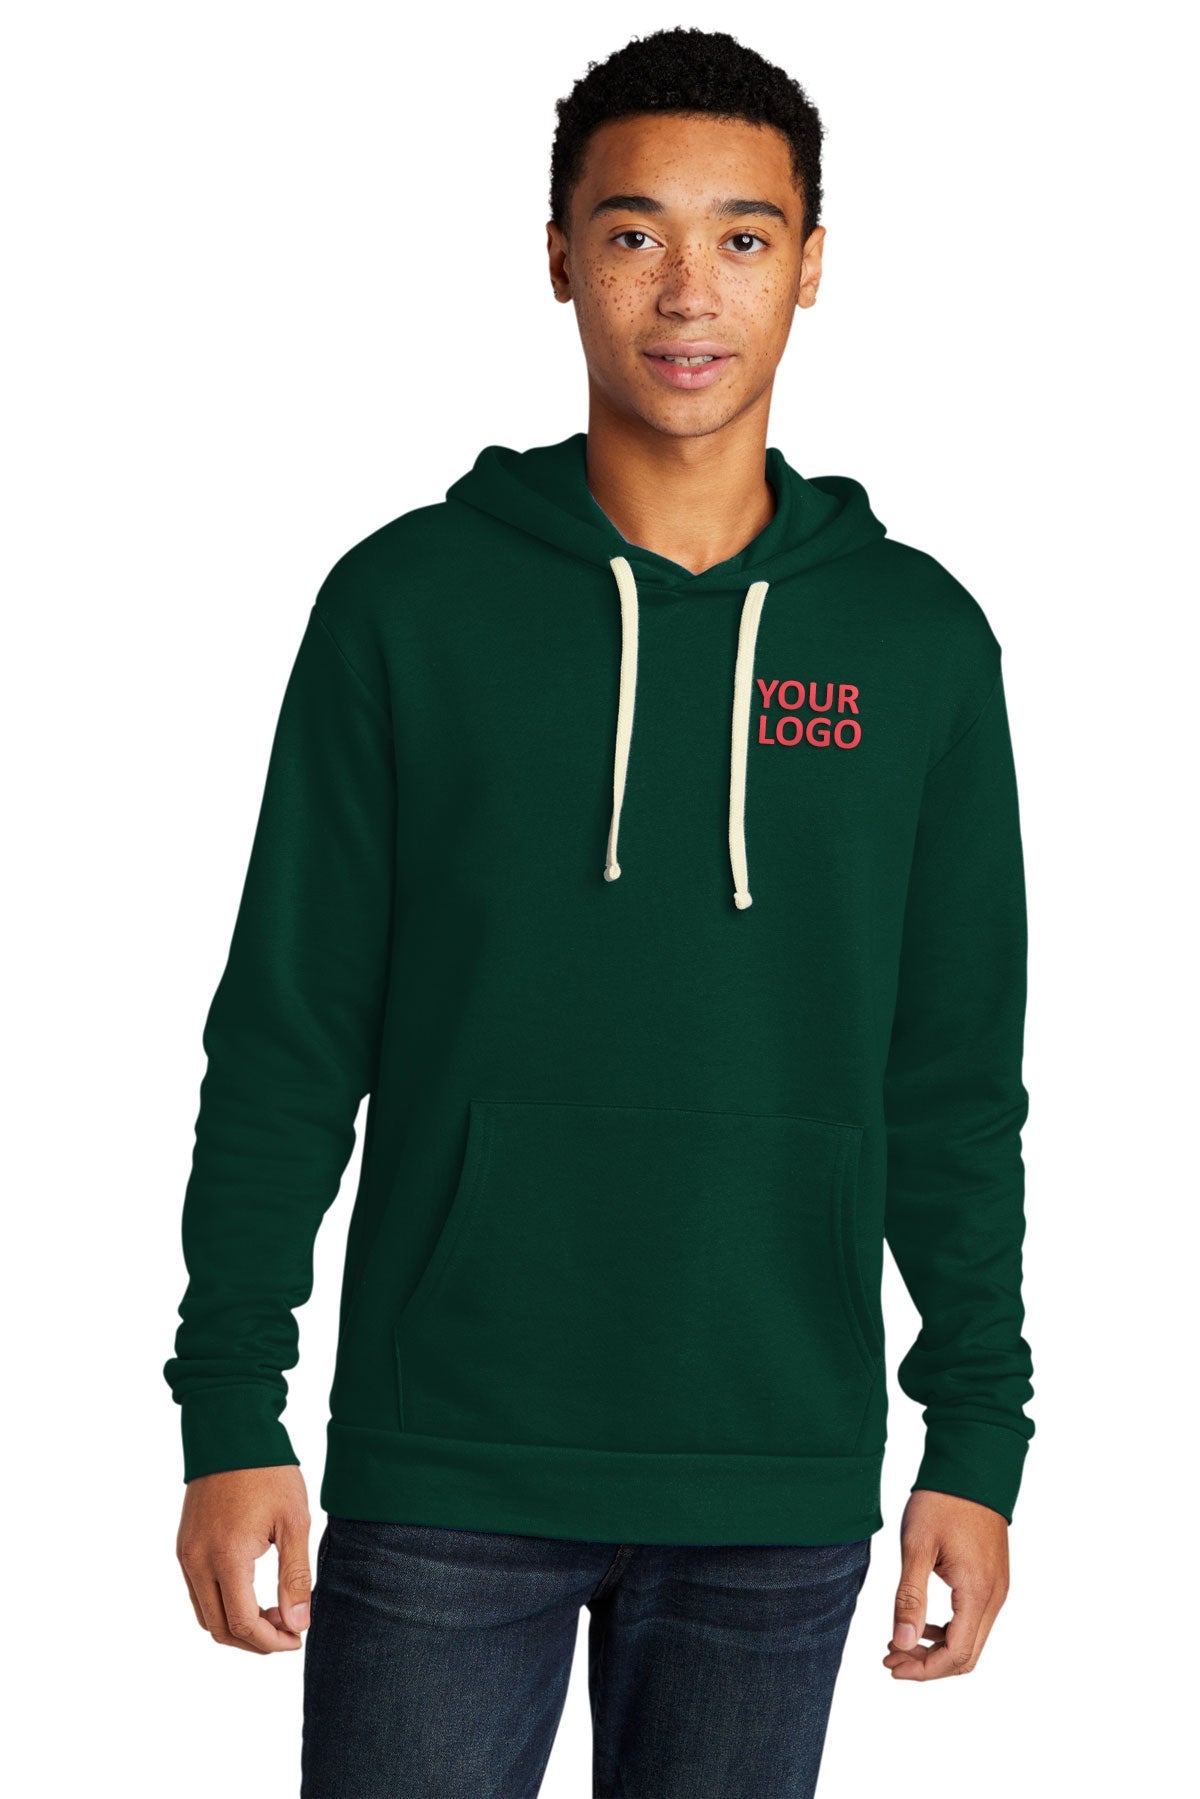 custom sweatshirts with logo Next Level Forest Green NL9303